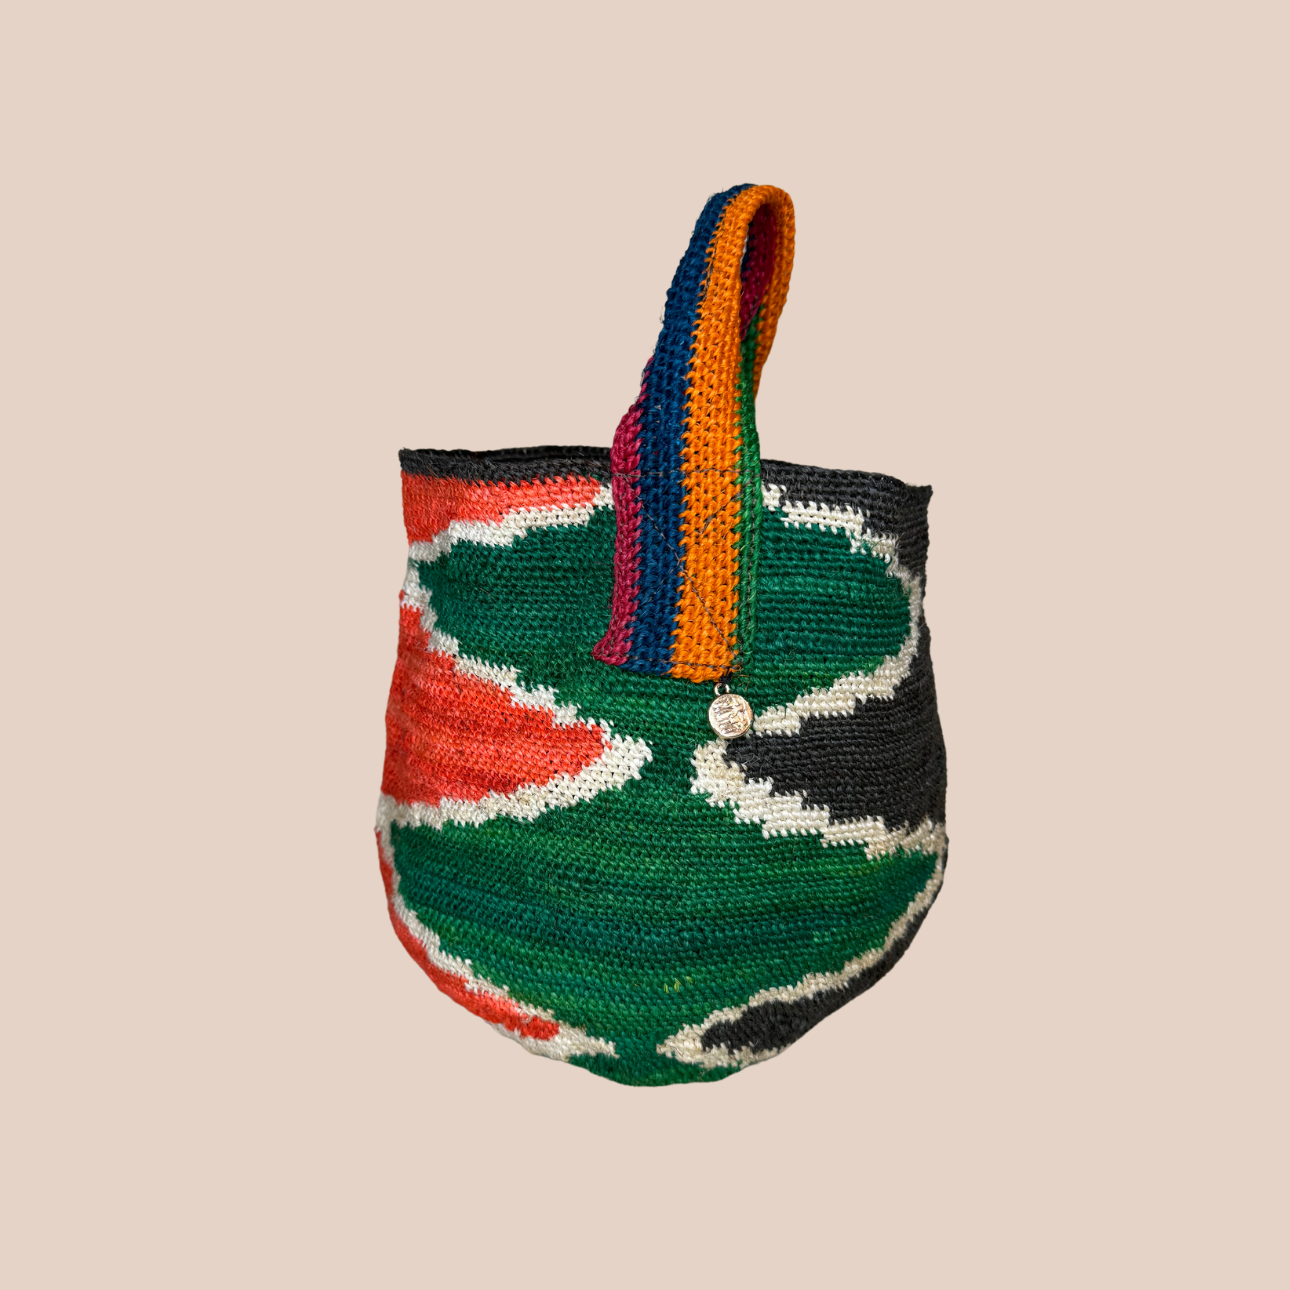 Image du sac Bahia de chez maison badigo, sac en fibres naturelle de cactus multicolore